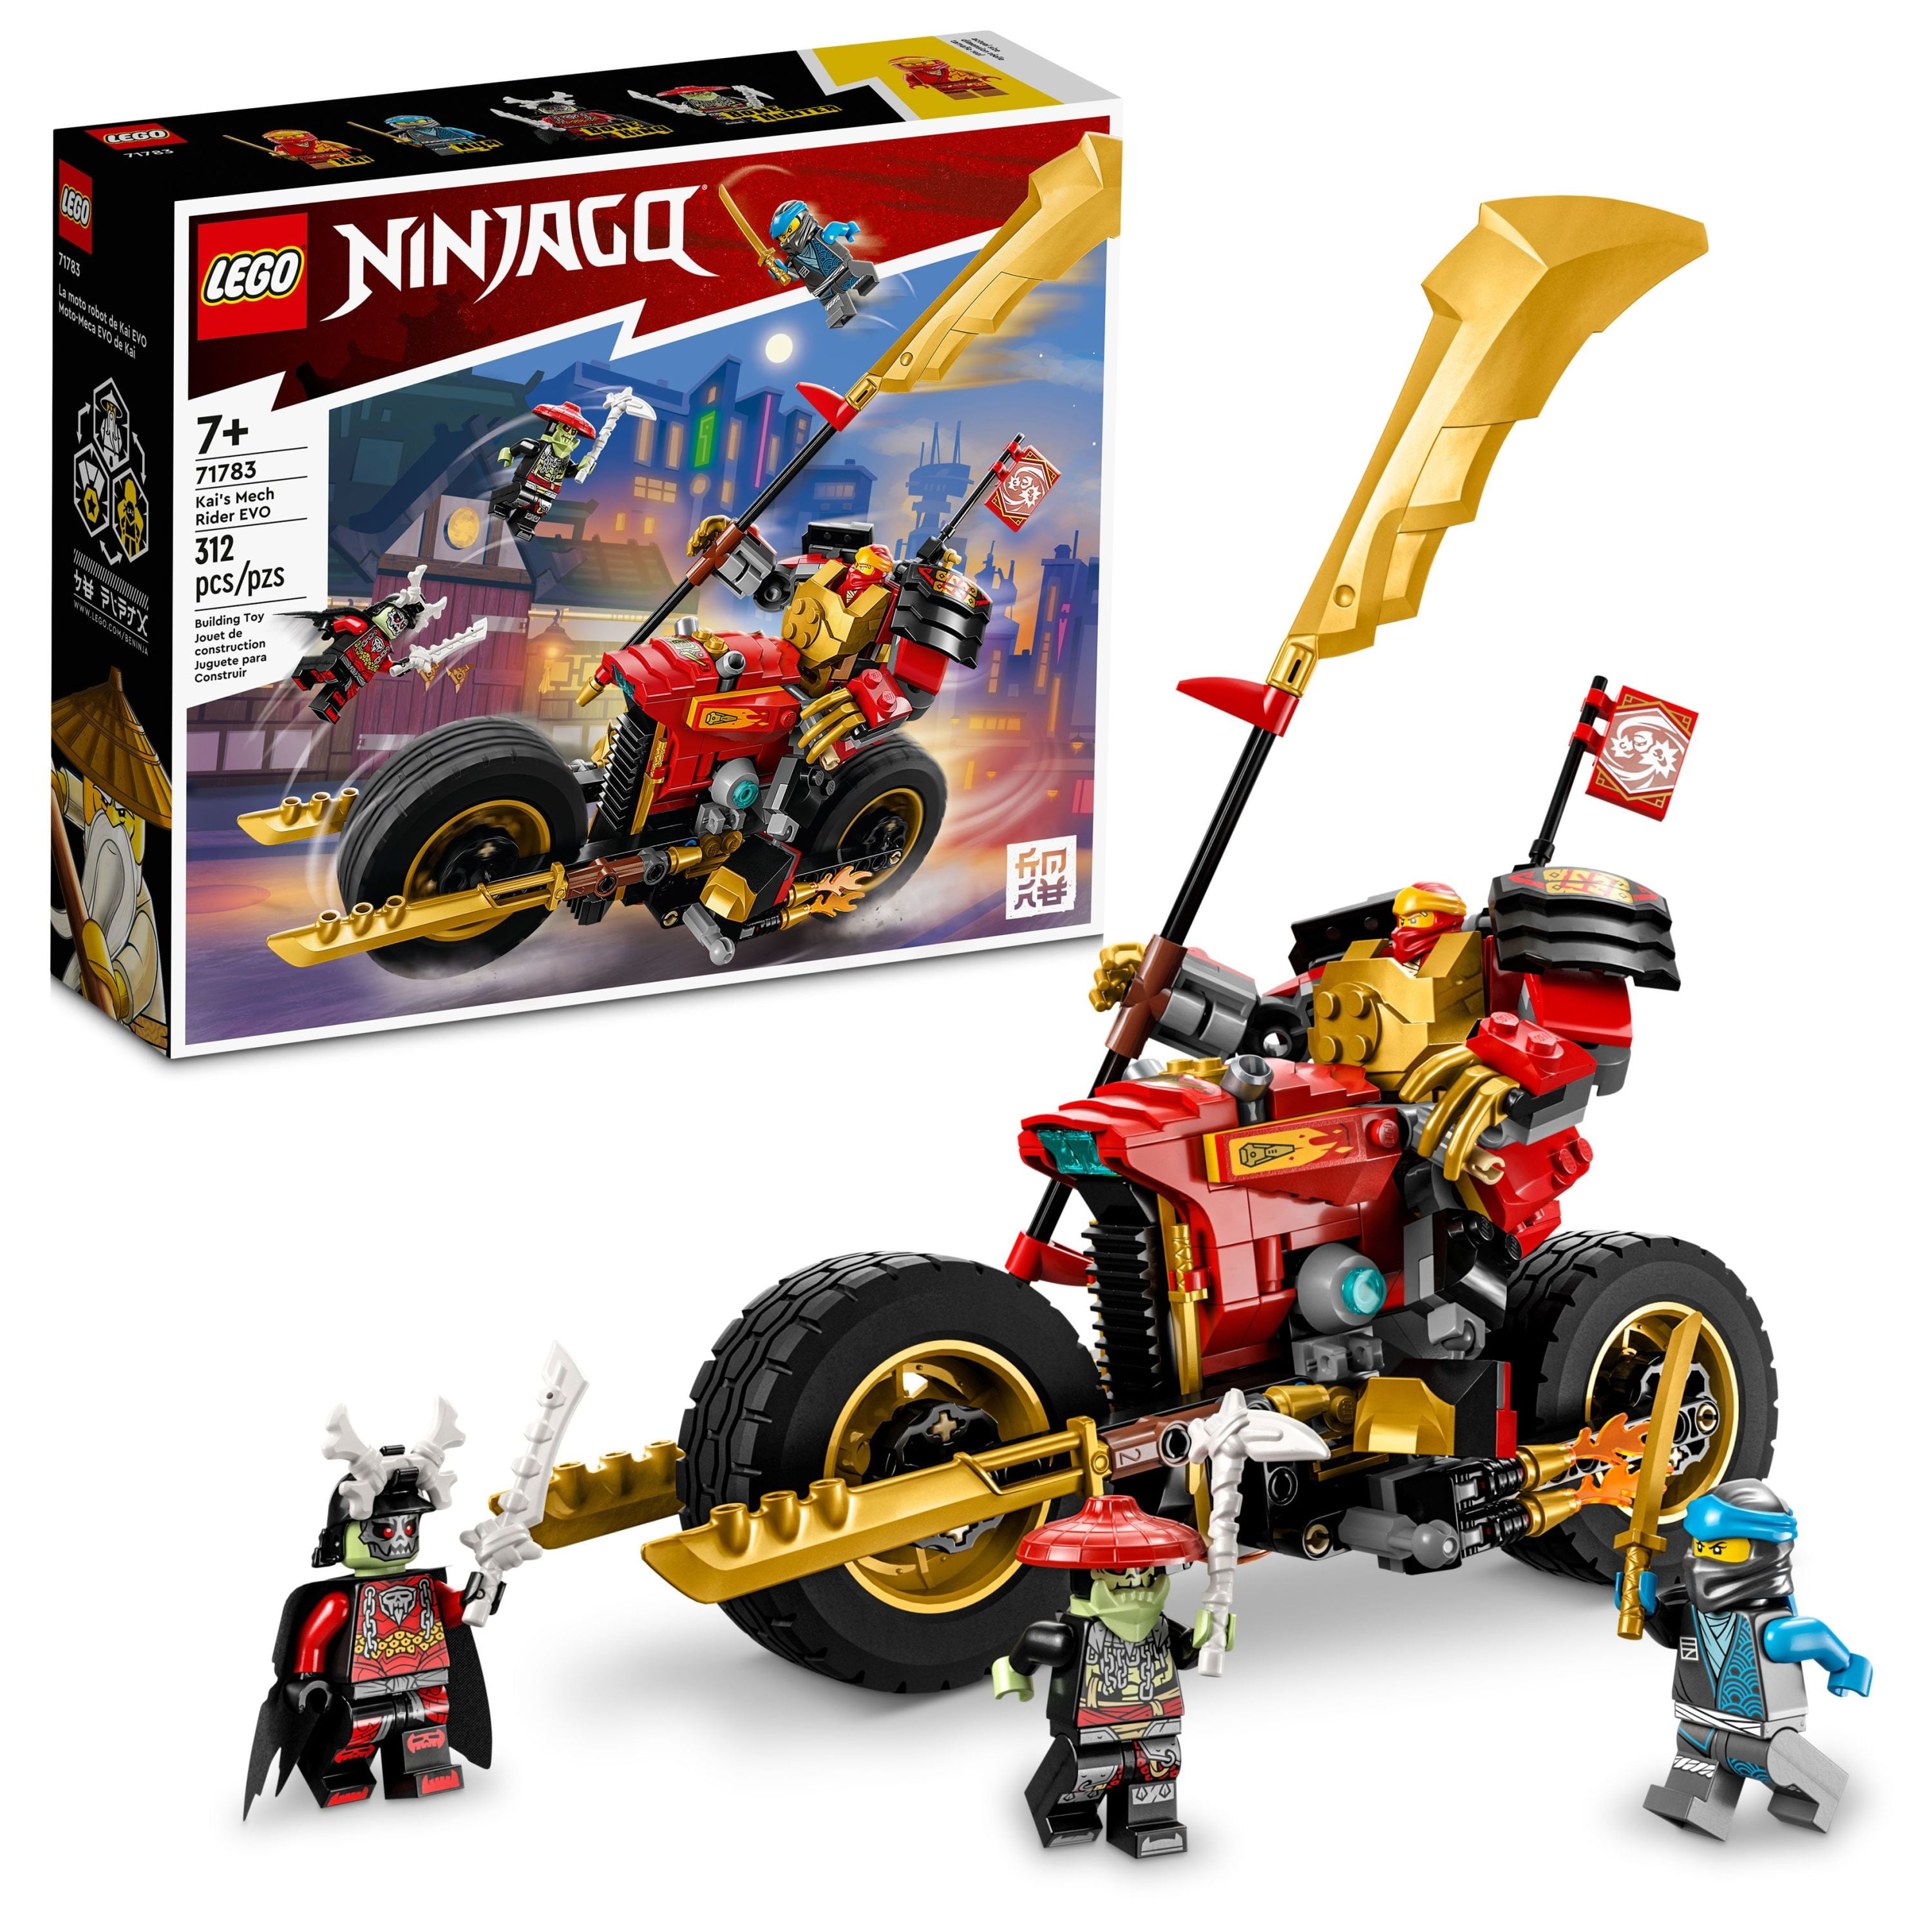 LEGO NINJAGO Nya's Samurai X MECH Action Figure, 71775 Robot Ninja 